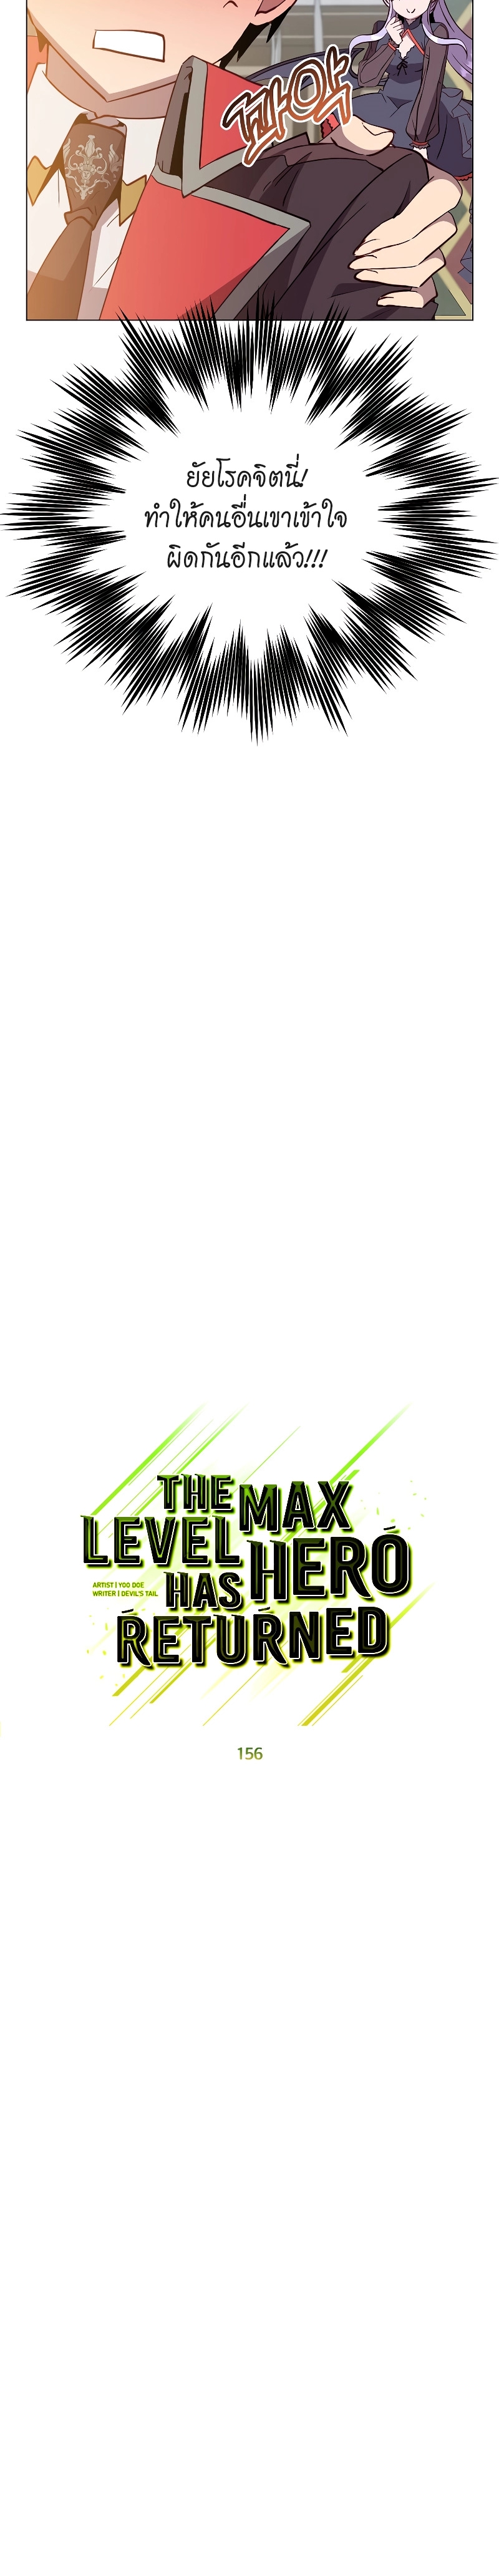 The Max Level Hero Has Returned 156 (9)